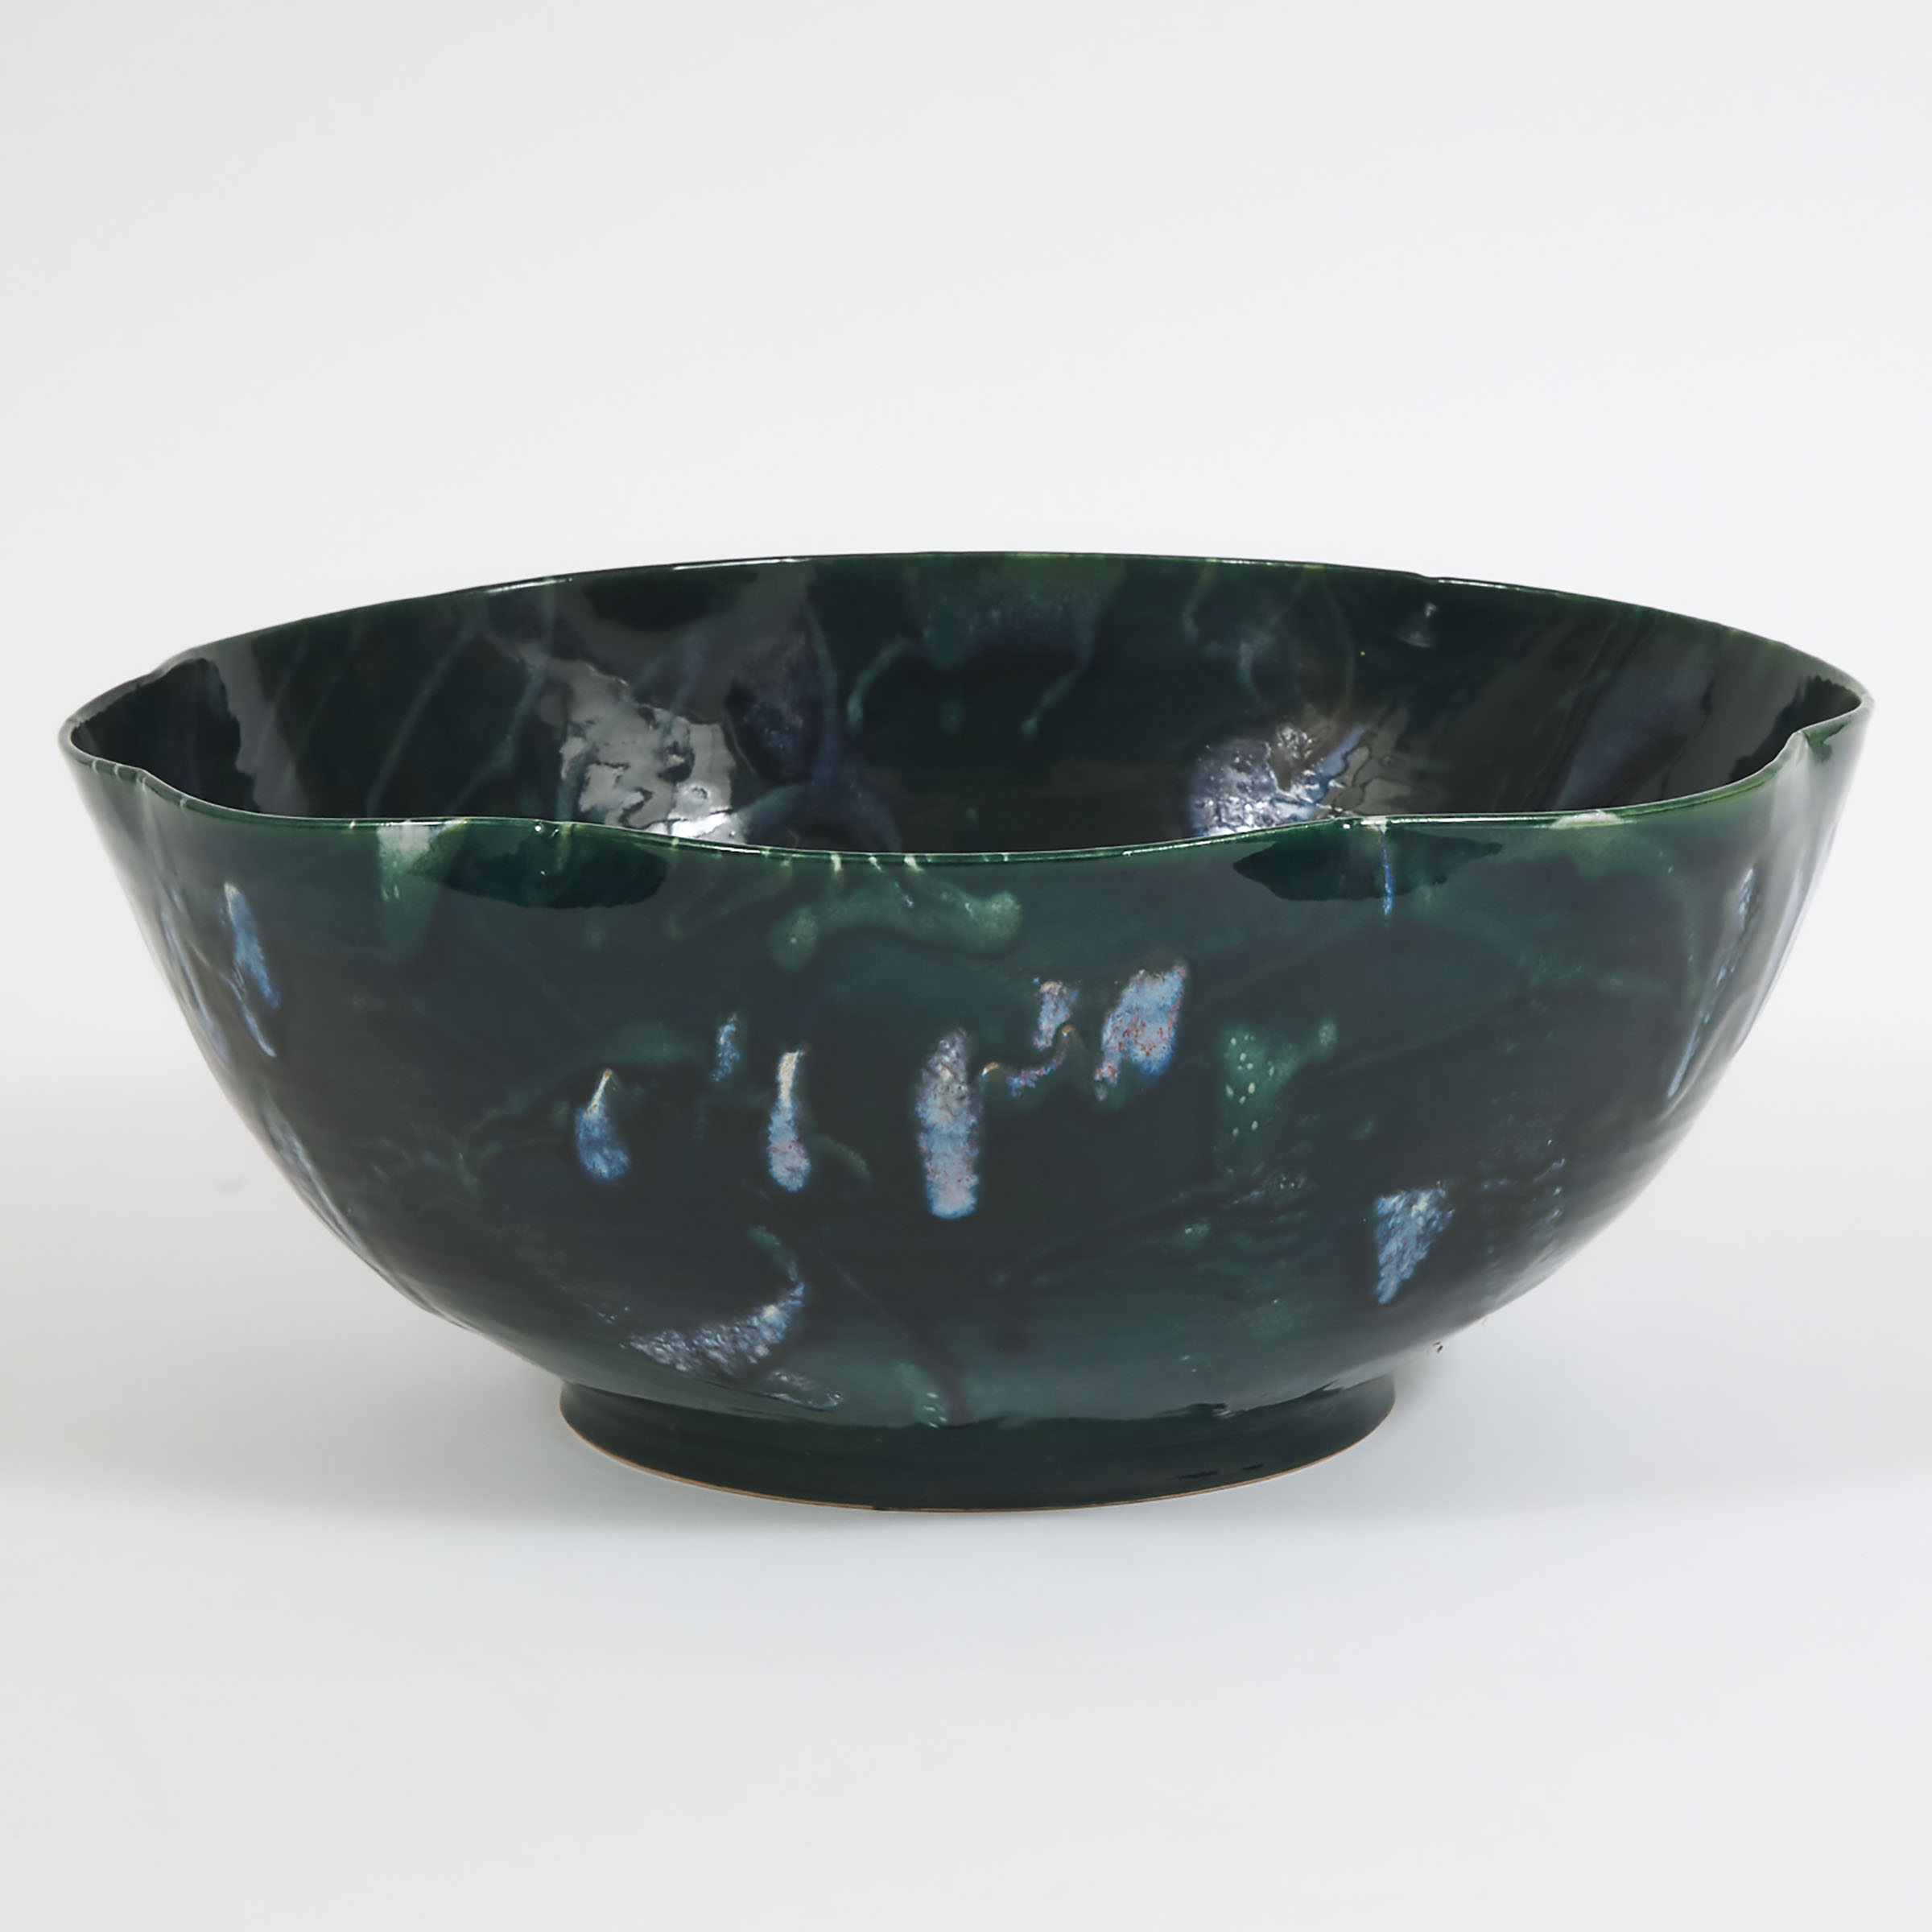 Kayo O'Young (Canadian, b.1950), Large Green and Blue Glazed Bowl, 1993